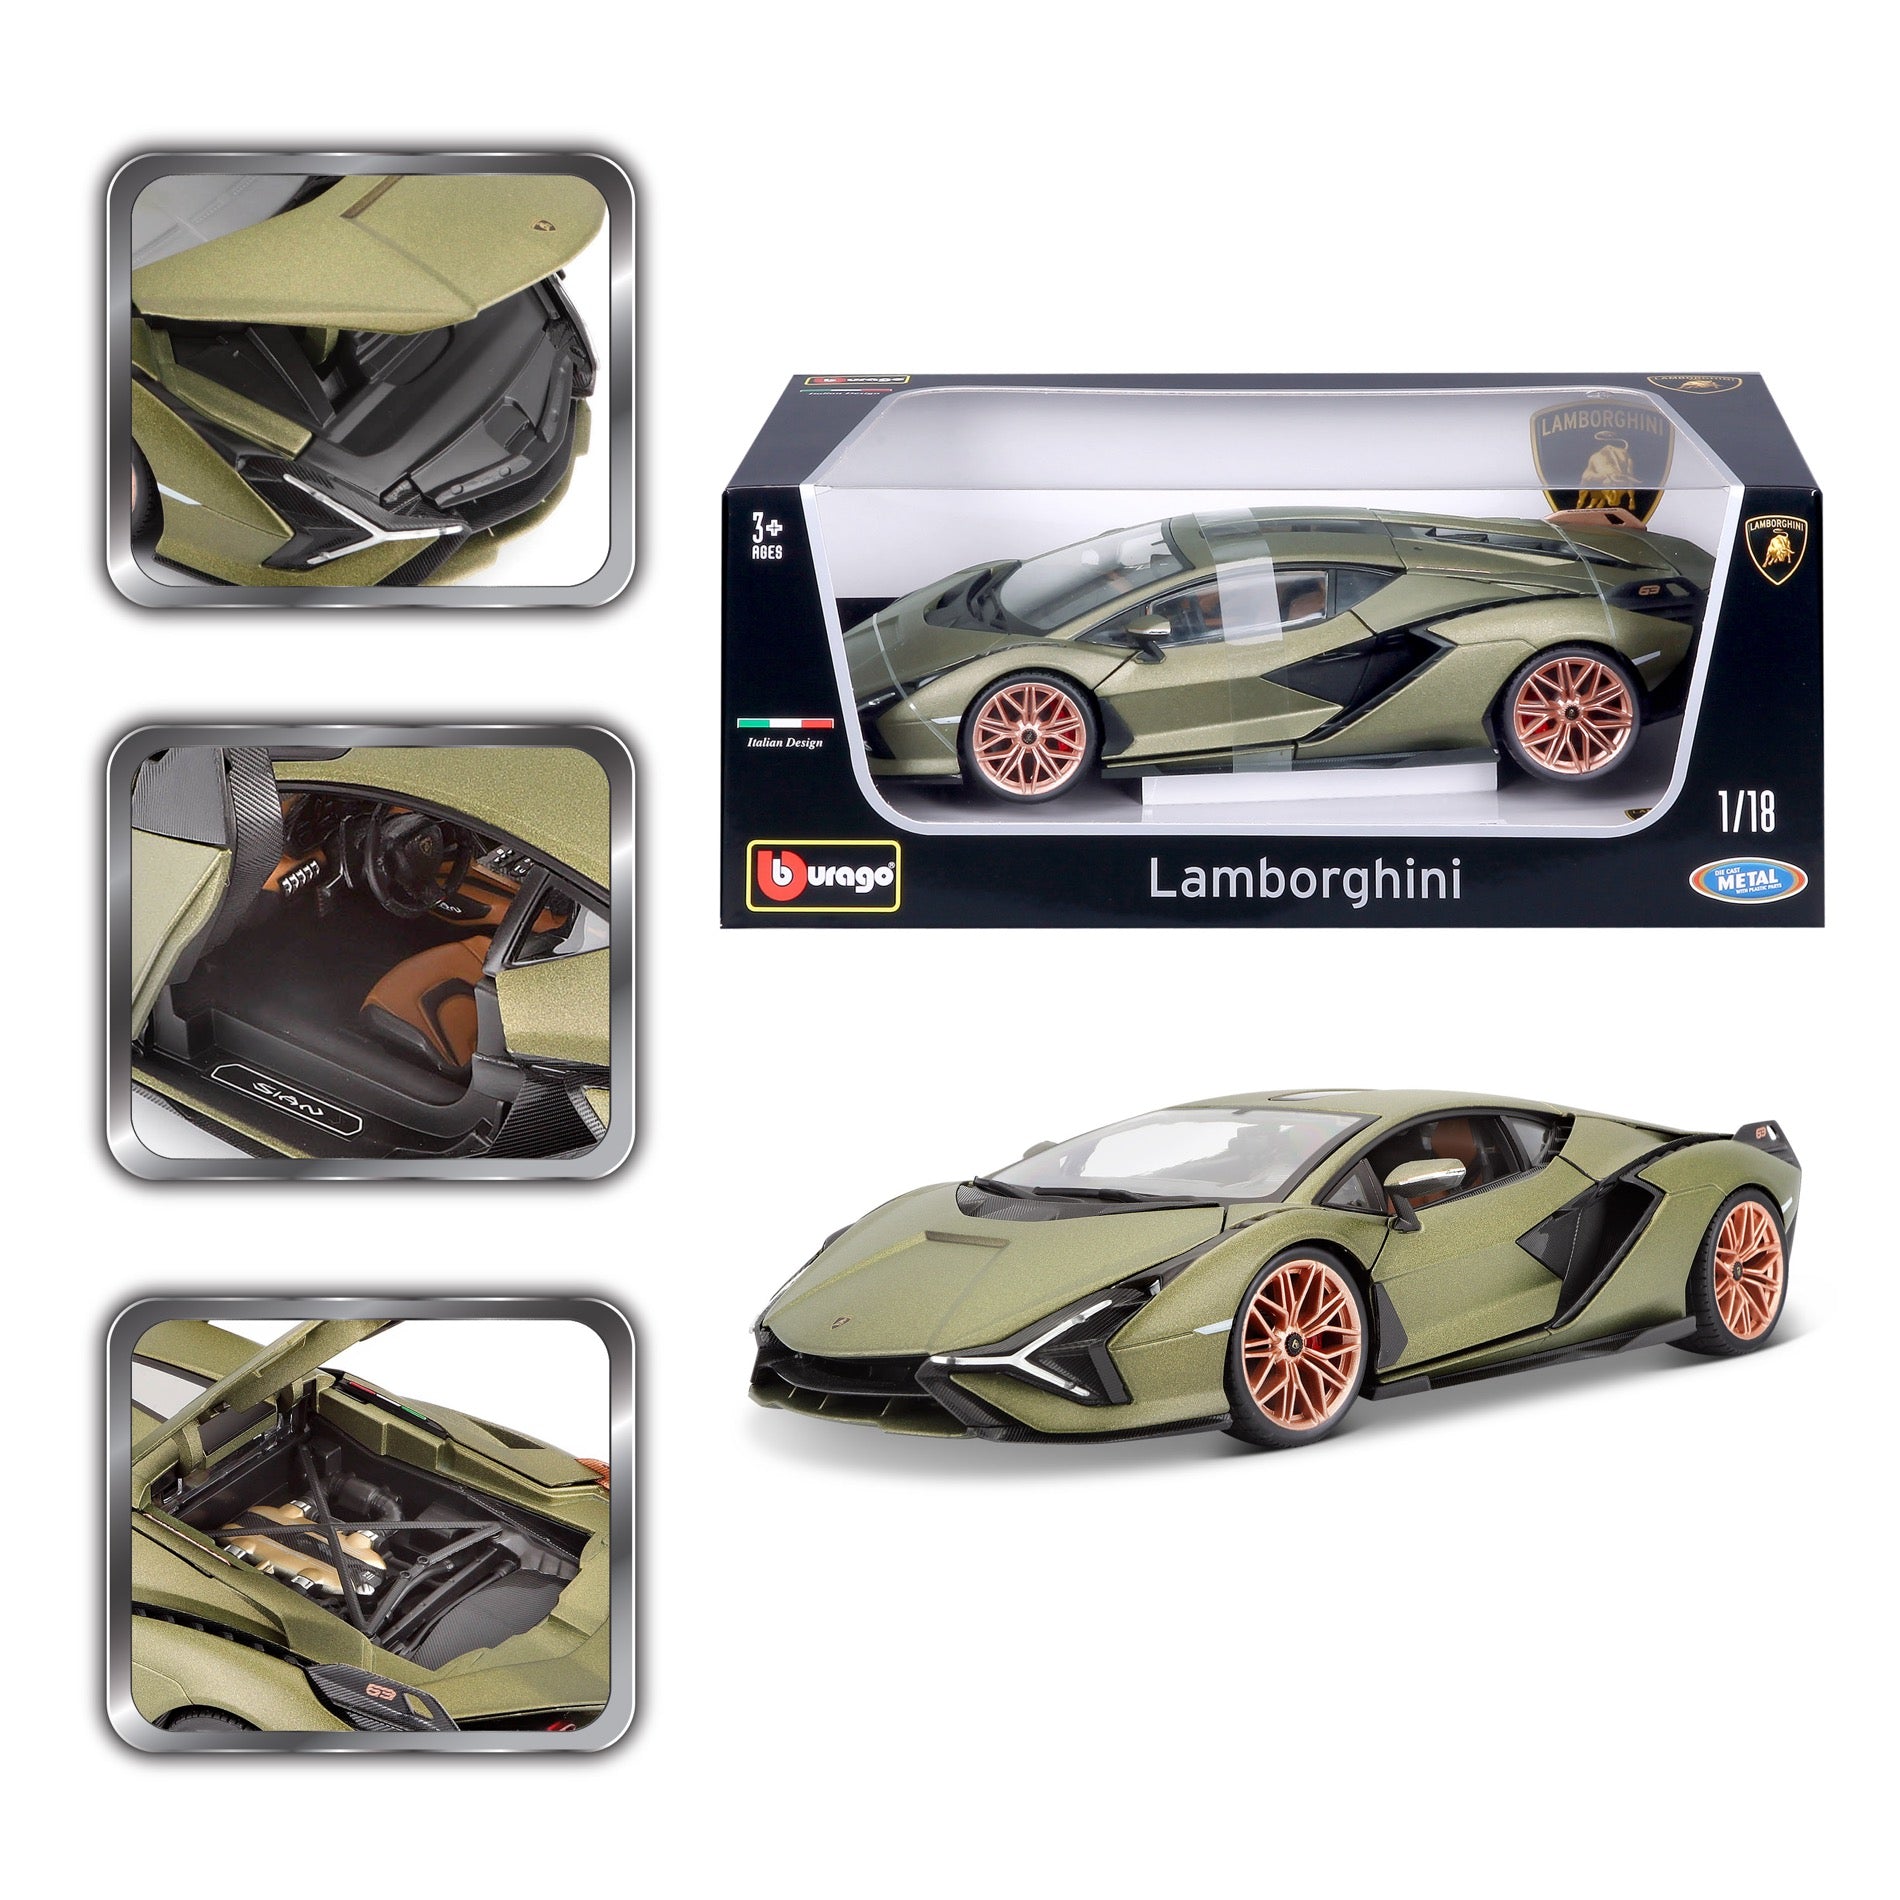 18-11046 GN - Bburago - 1:18 - Lamborghini Sian FKP 37 - green